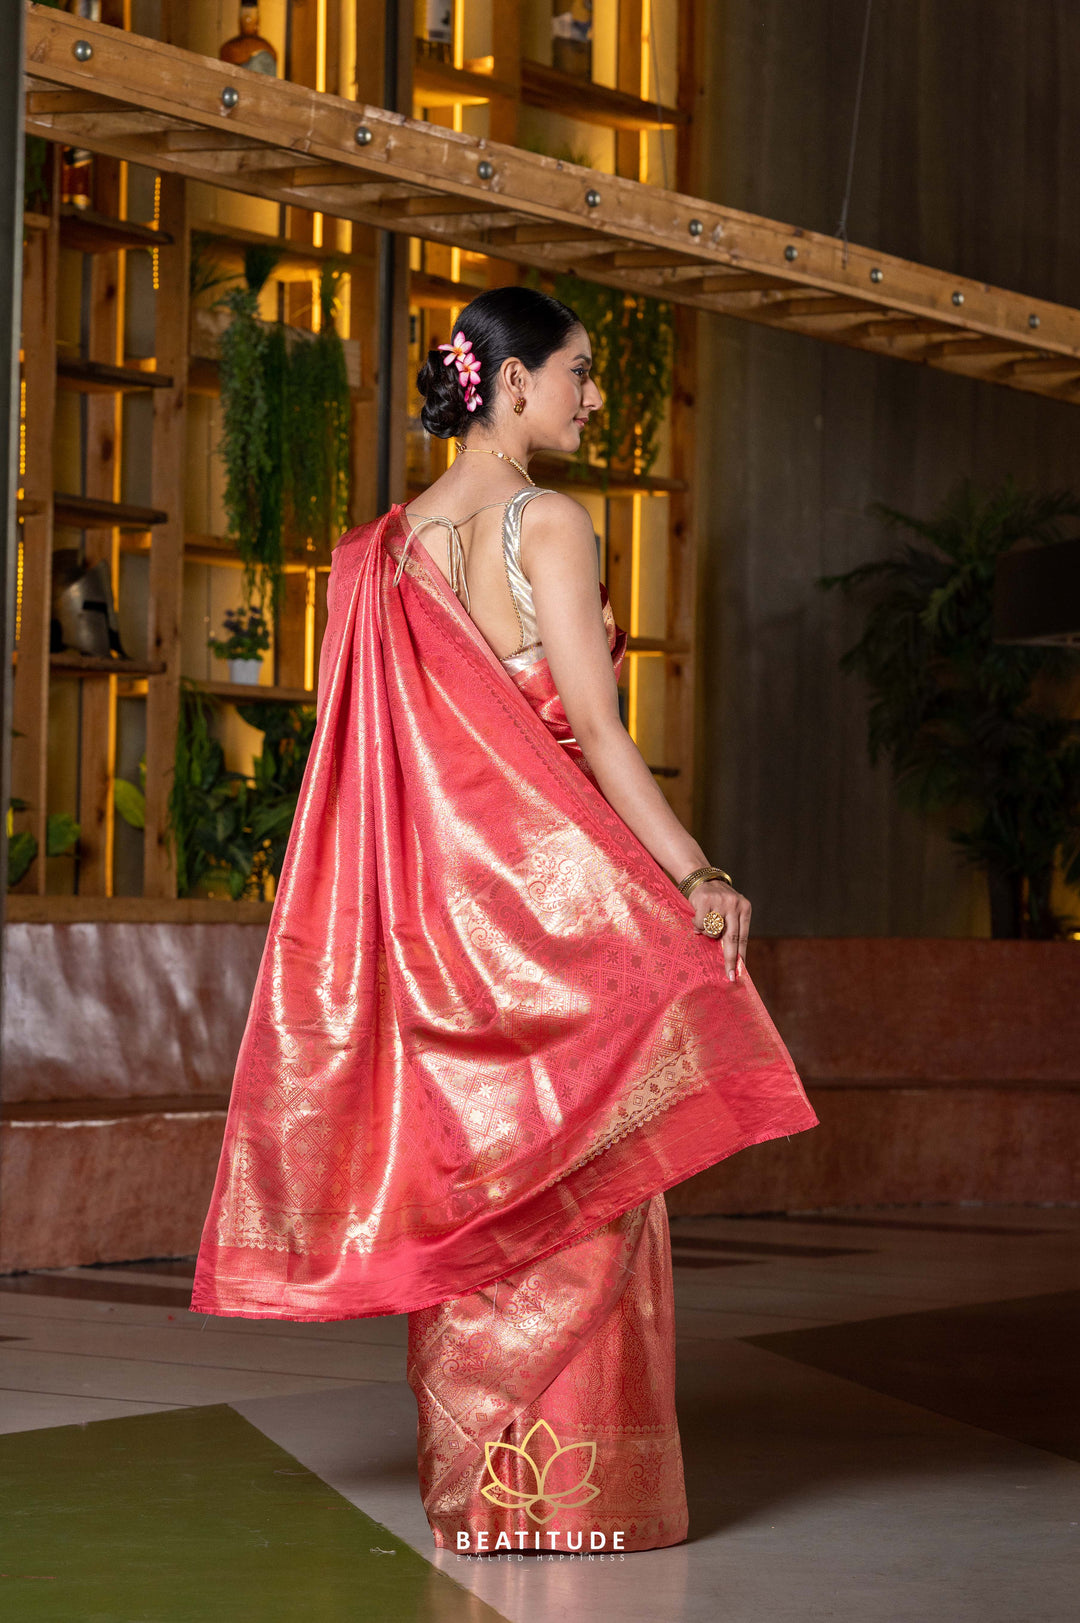 Beatitude Pink Gold-Toned Ethnic Motifs Zari Silk Blend Banarasi Saree with Unstitched Blouse